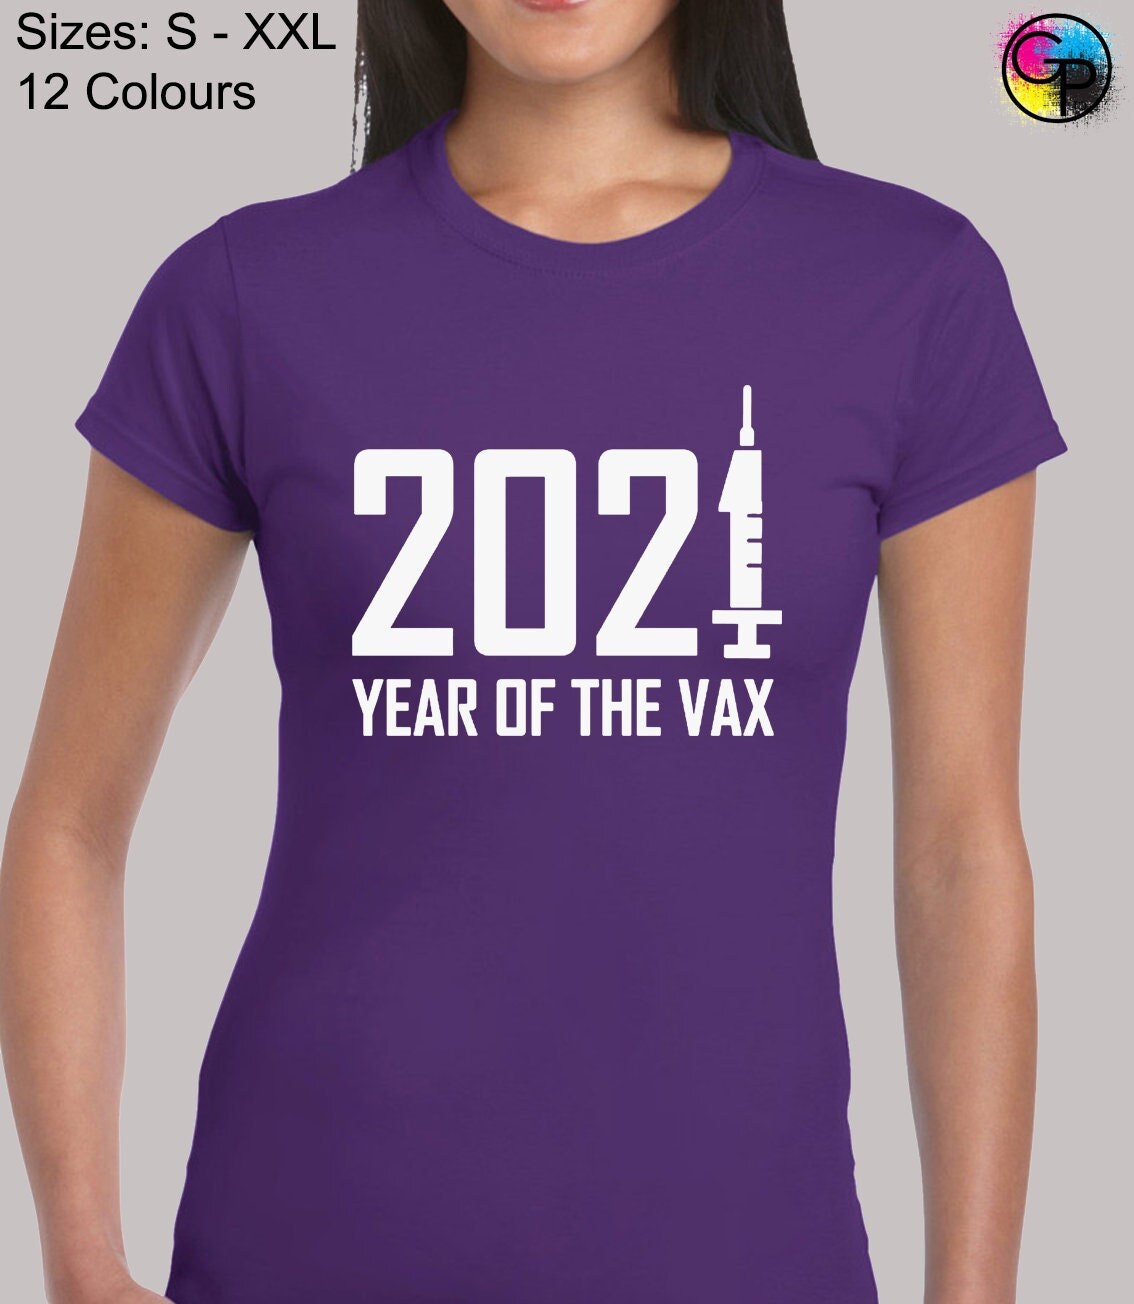 Vaxxed & Waxed T-Shirt funny saying sarcastic novelty cute Canotta 